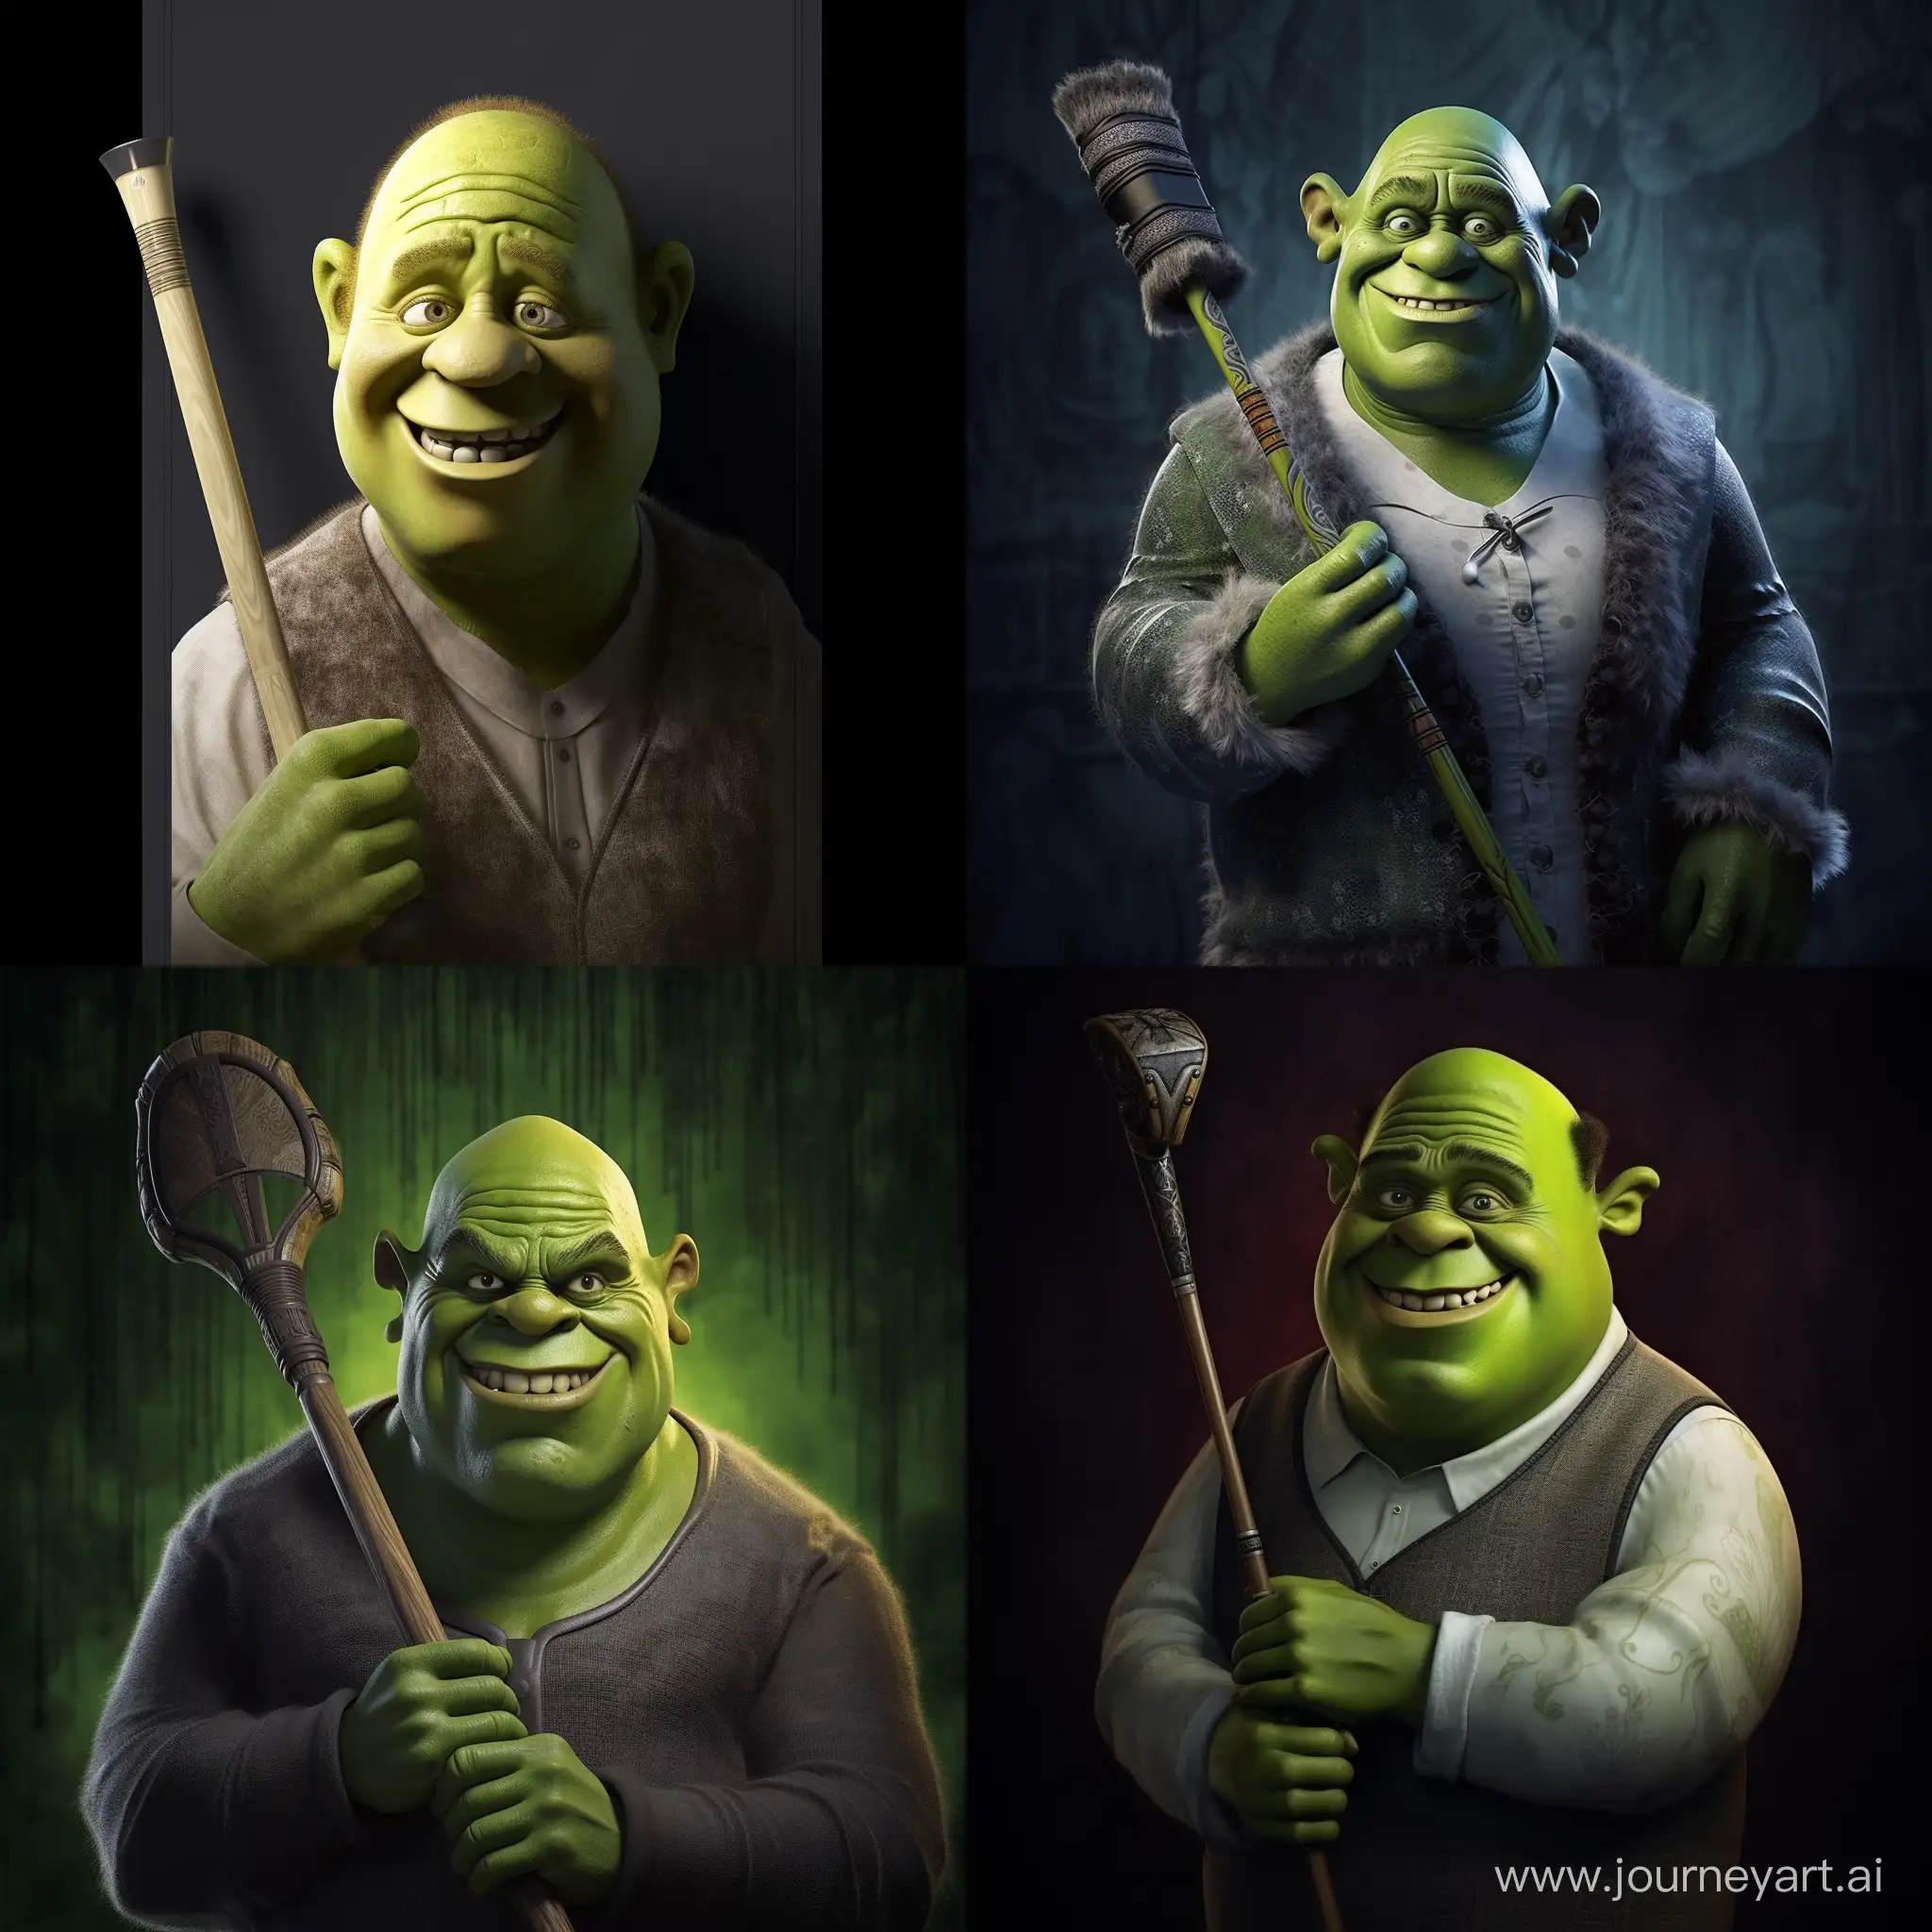 Mythical-Creature-Shrek-Wielding-a-Club